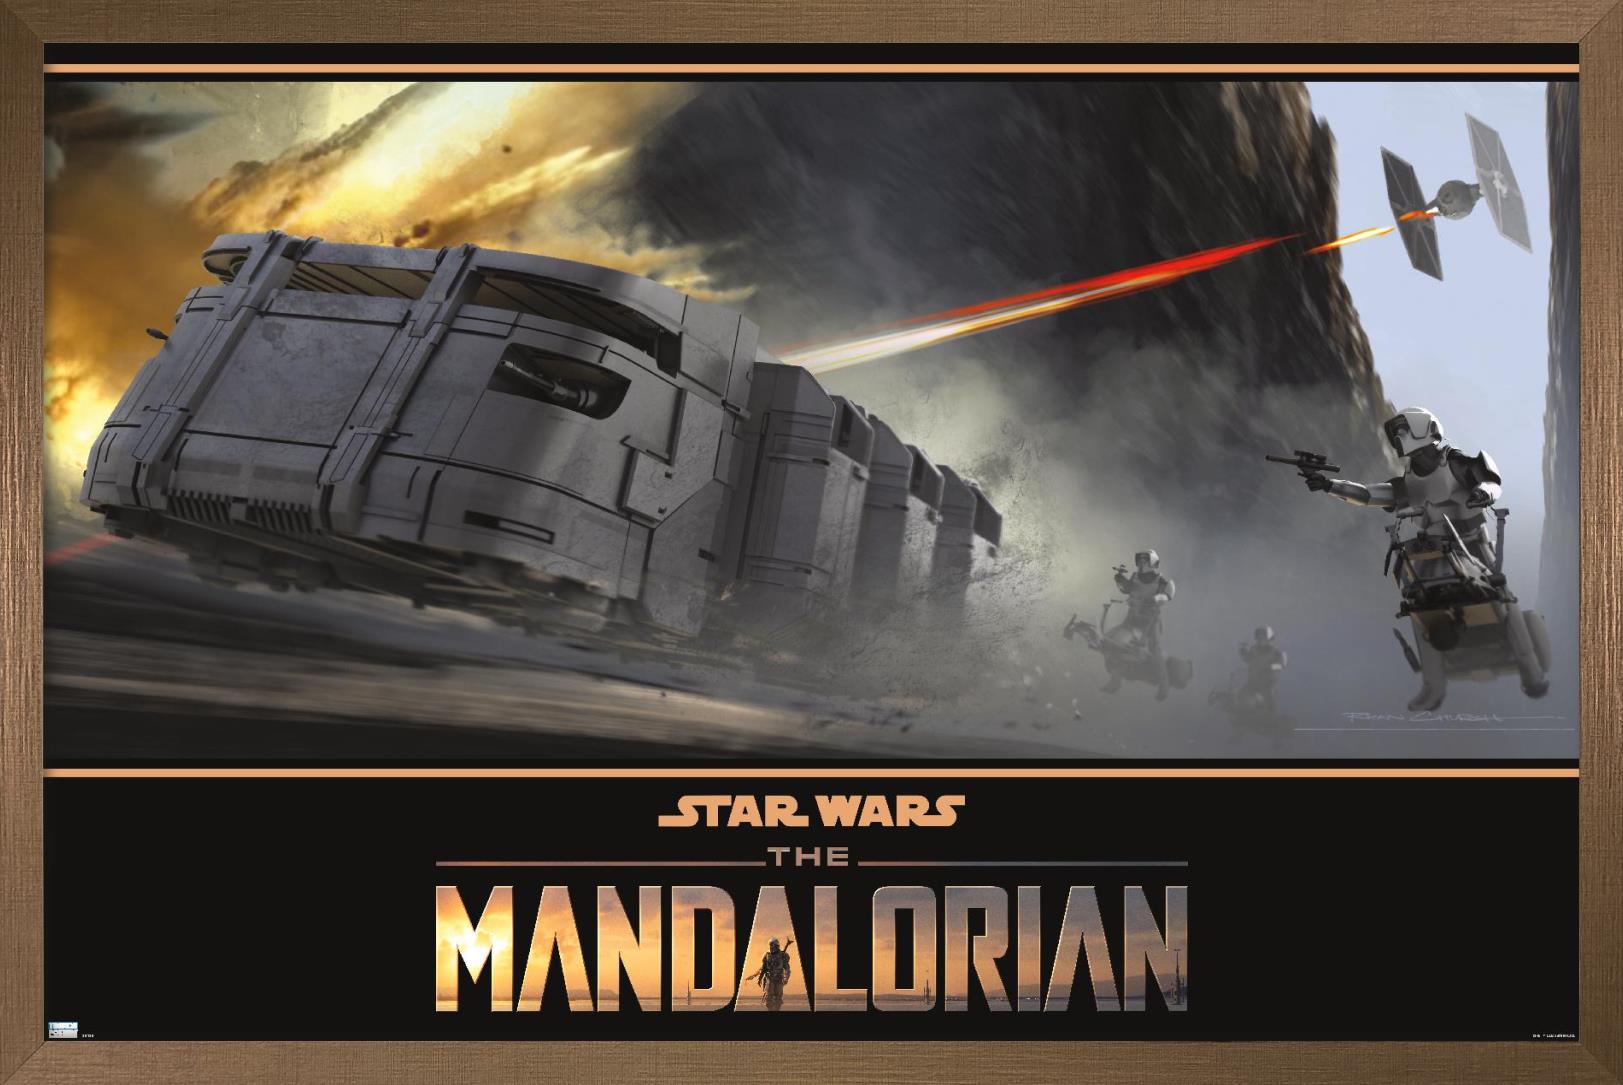 Star Wars: The Mandalorian Season 2 - TIE Fighter Battle Wall Poster, 14.725" x 22.375", Framed - image 1 of 5